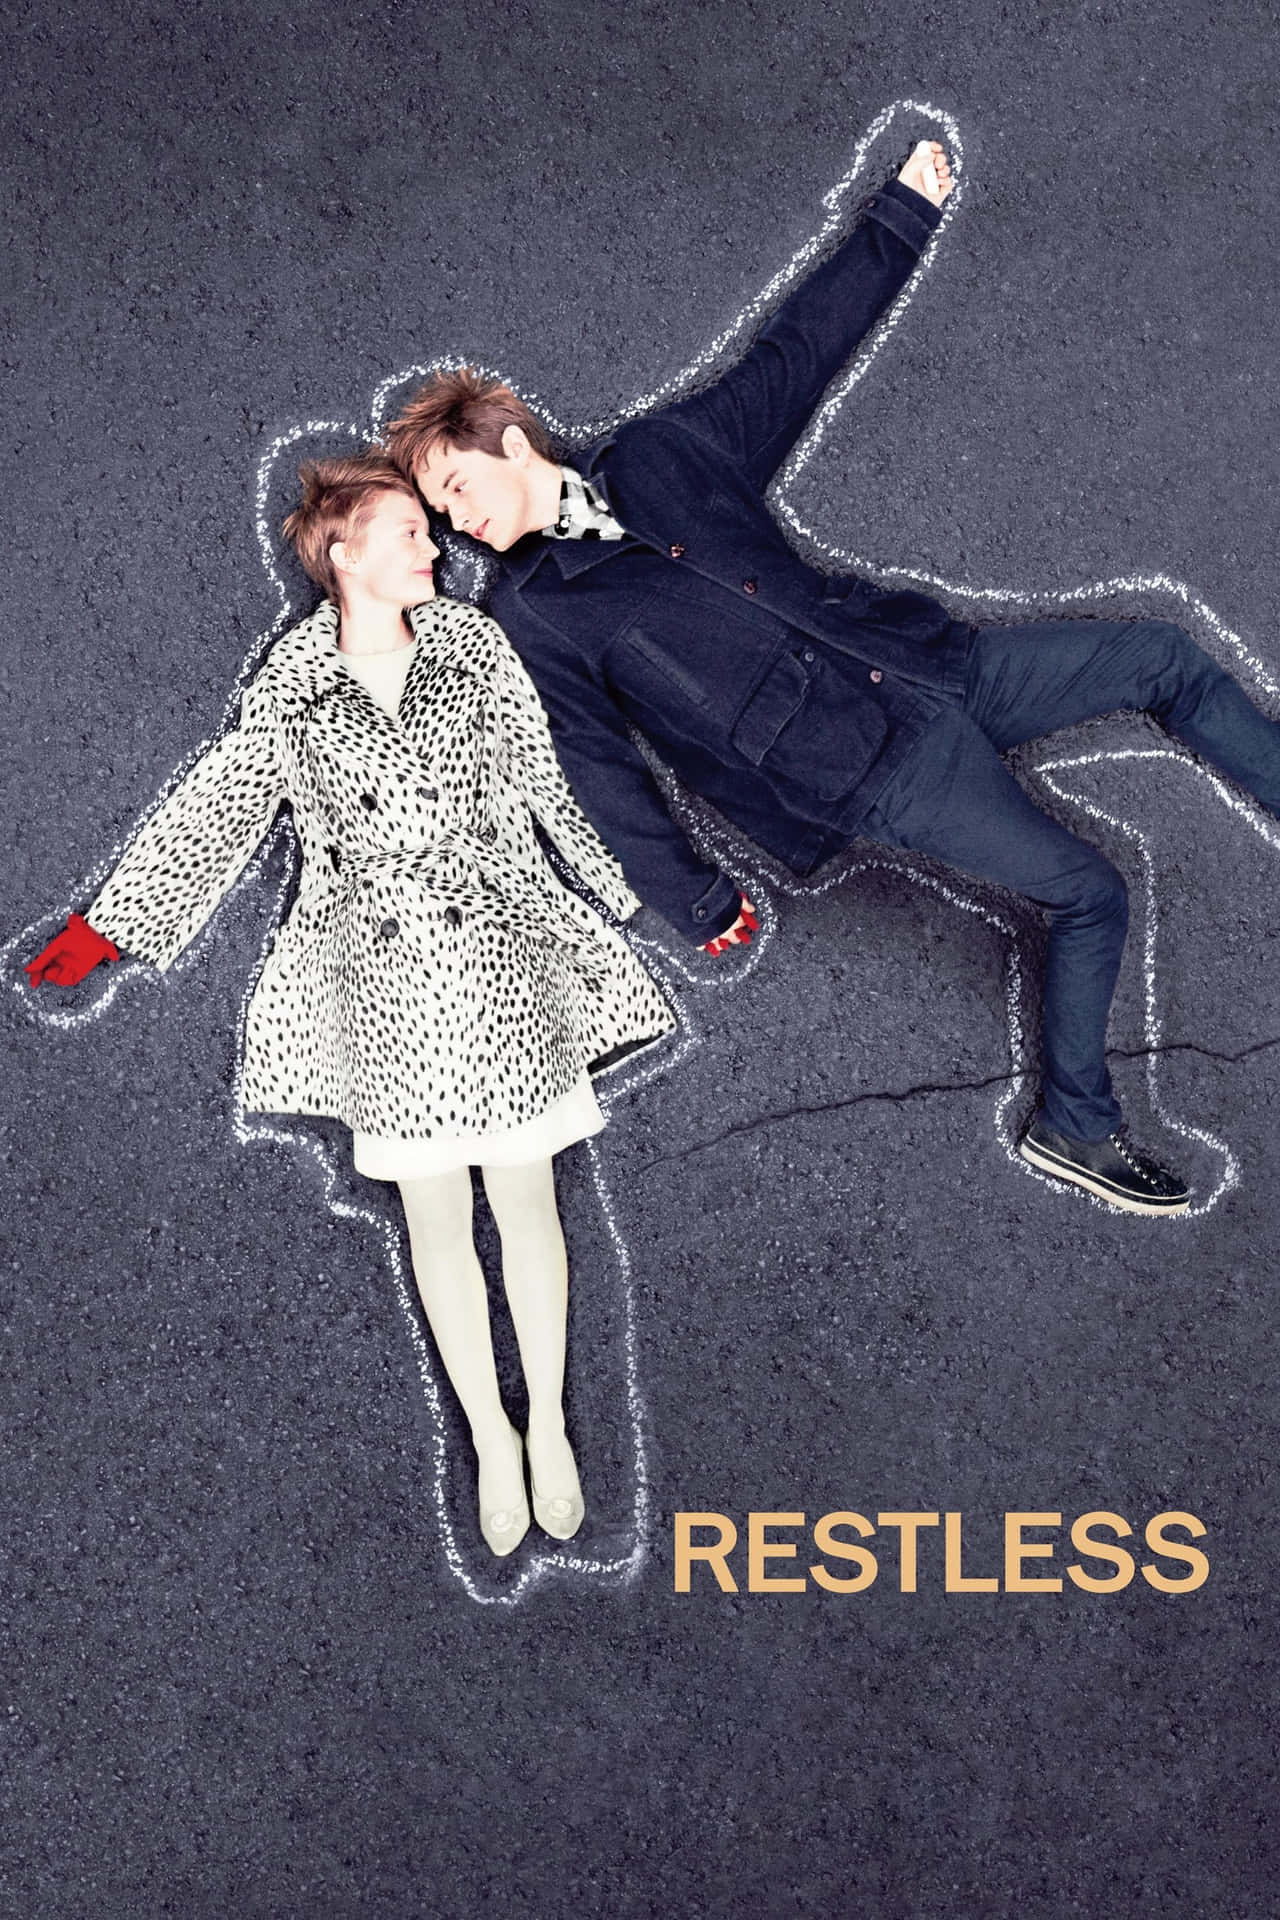 Restless Movie Poster Wallpaper